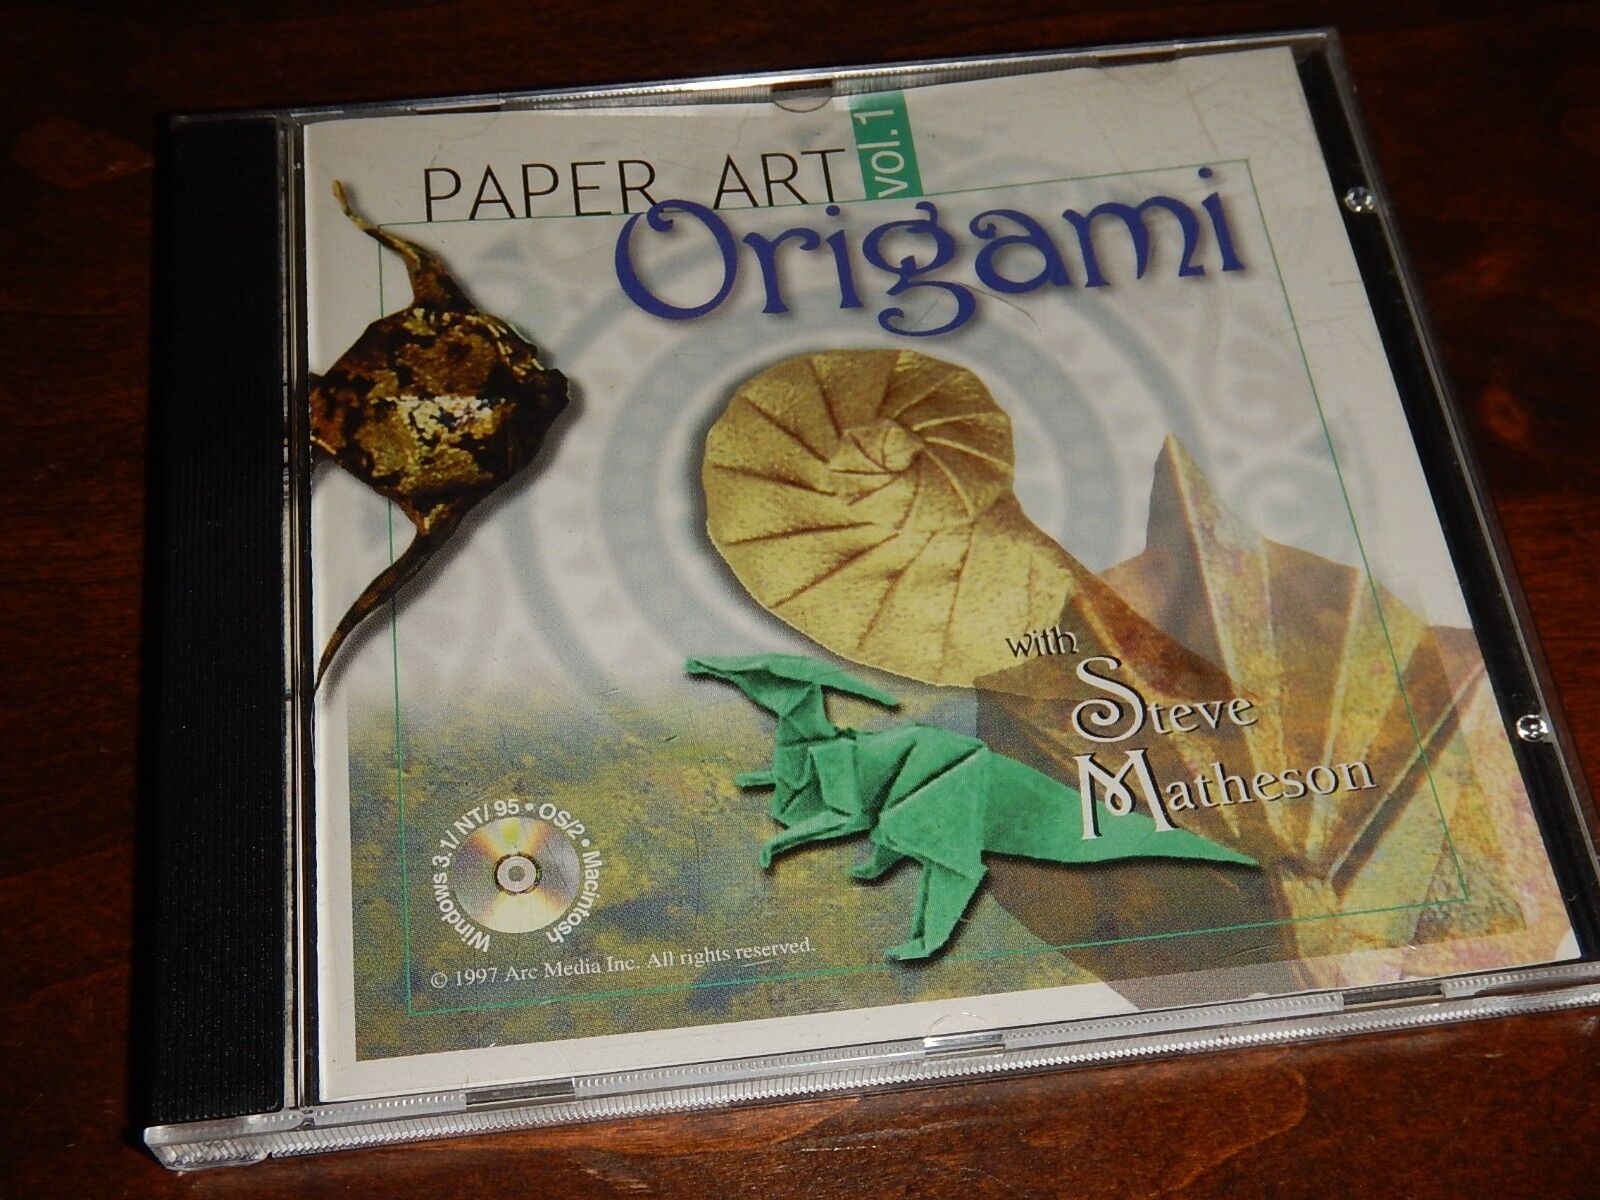 Paper Art Vol 1 ORIGAMI on CD-ROM for PC/MAC Steve Matheson 1997